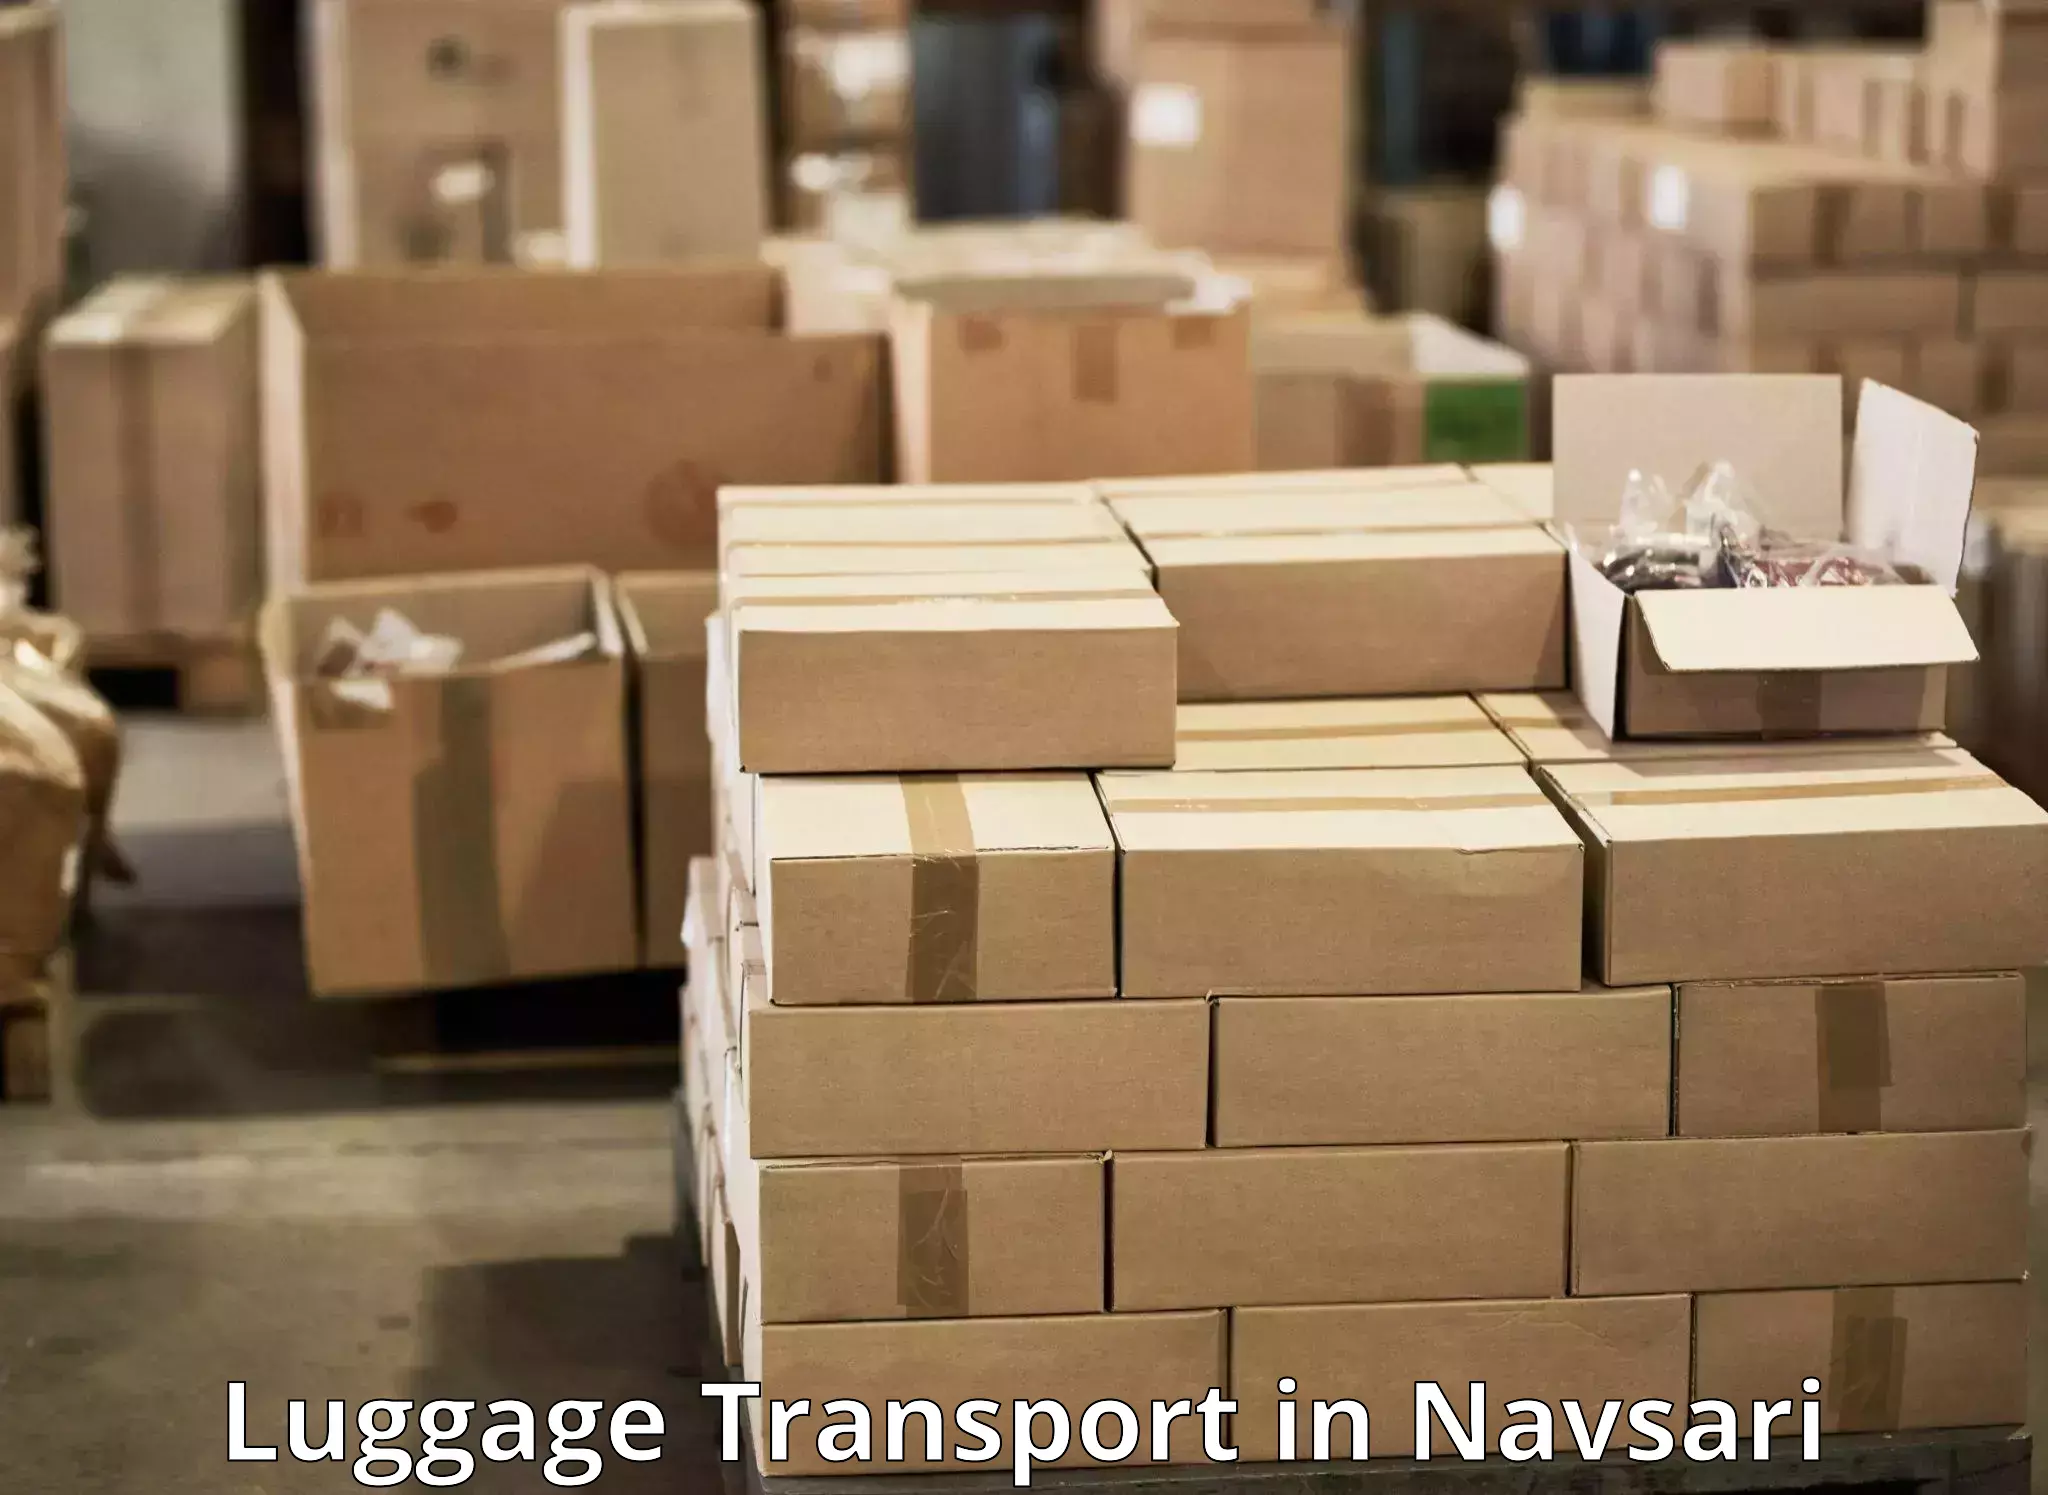 Luggage transport deals in Navsari